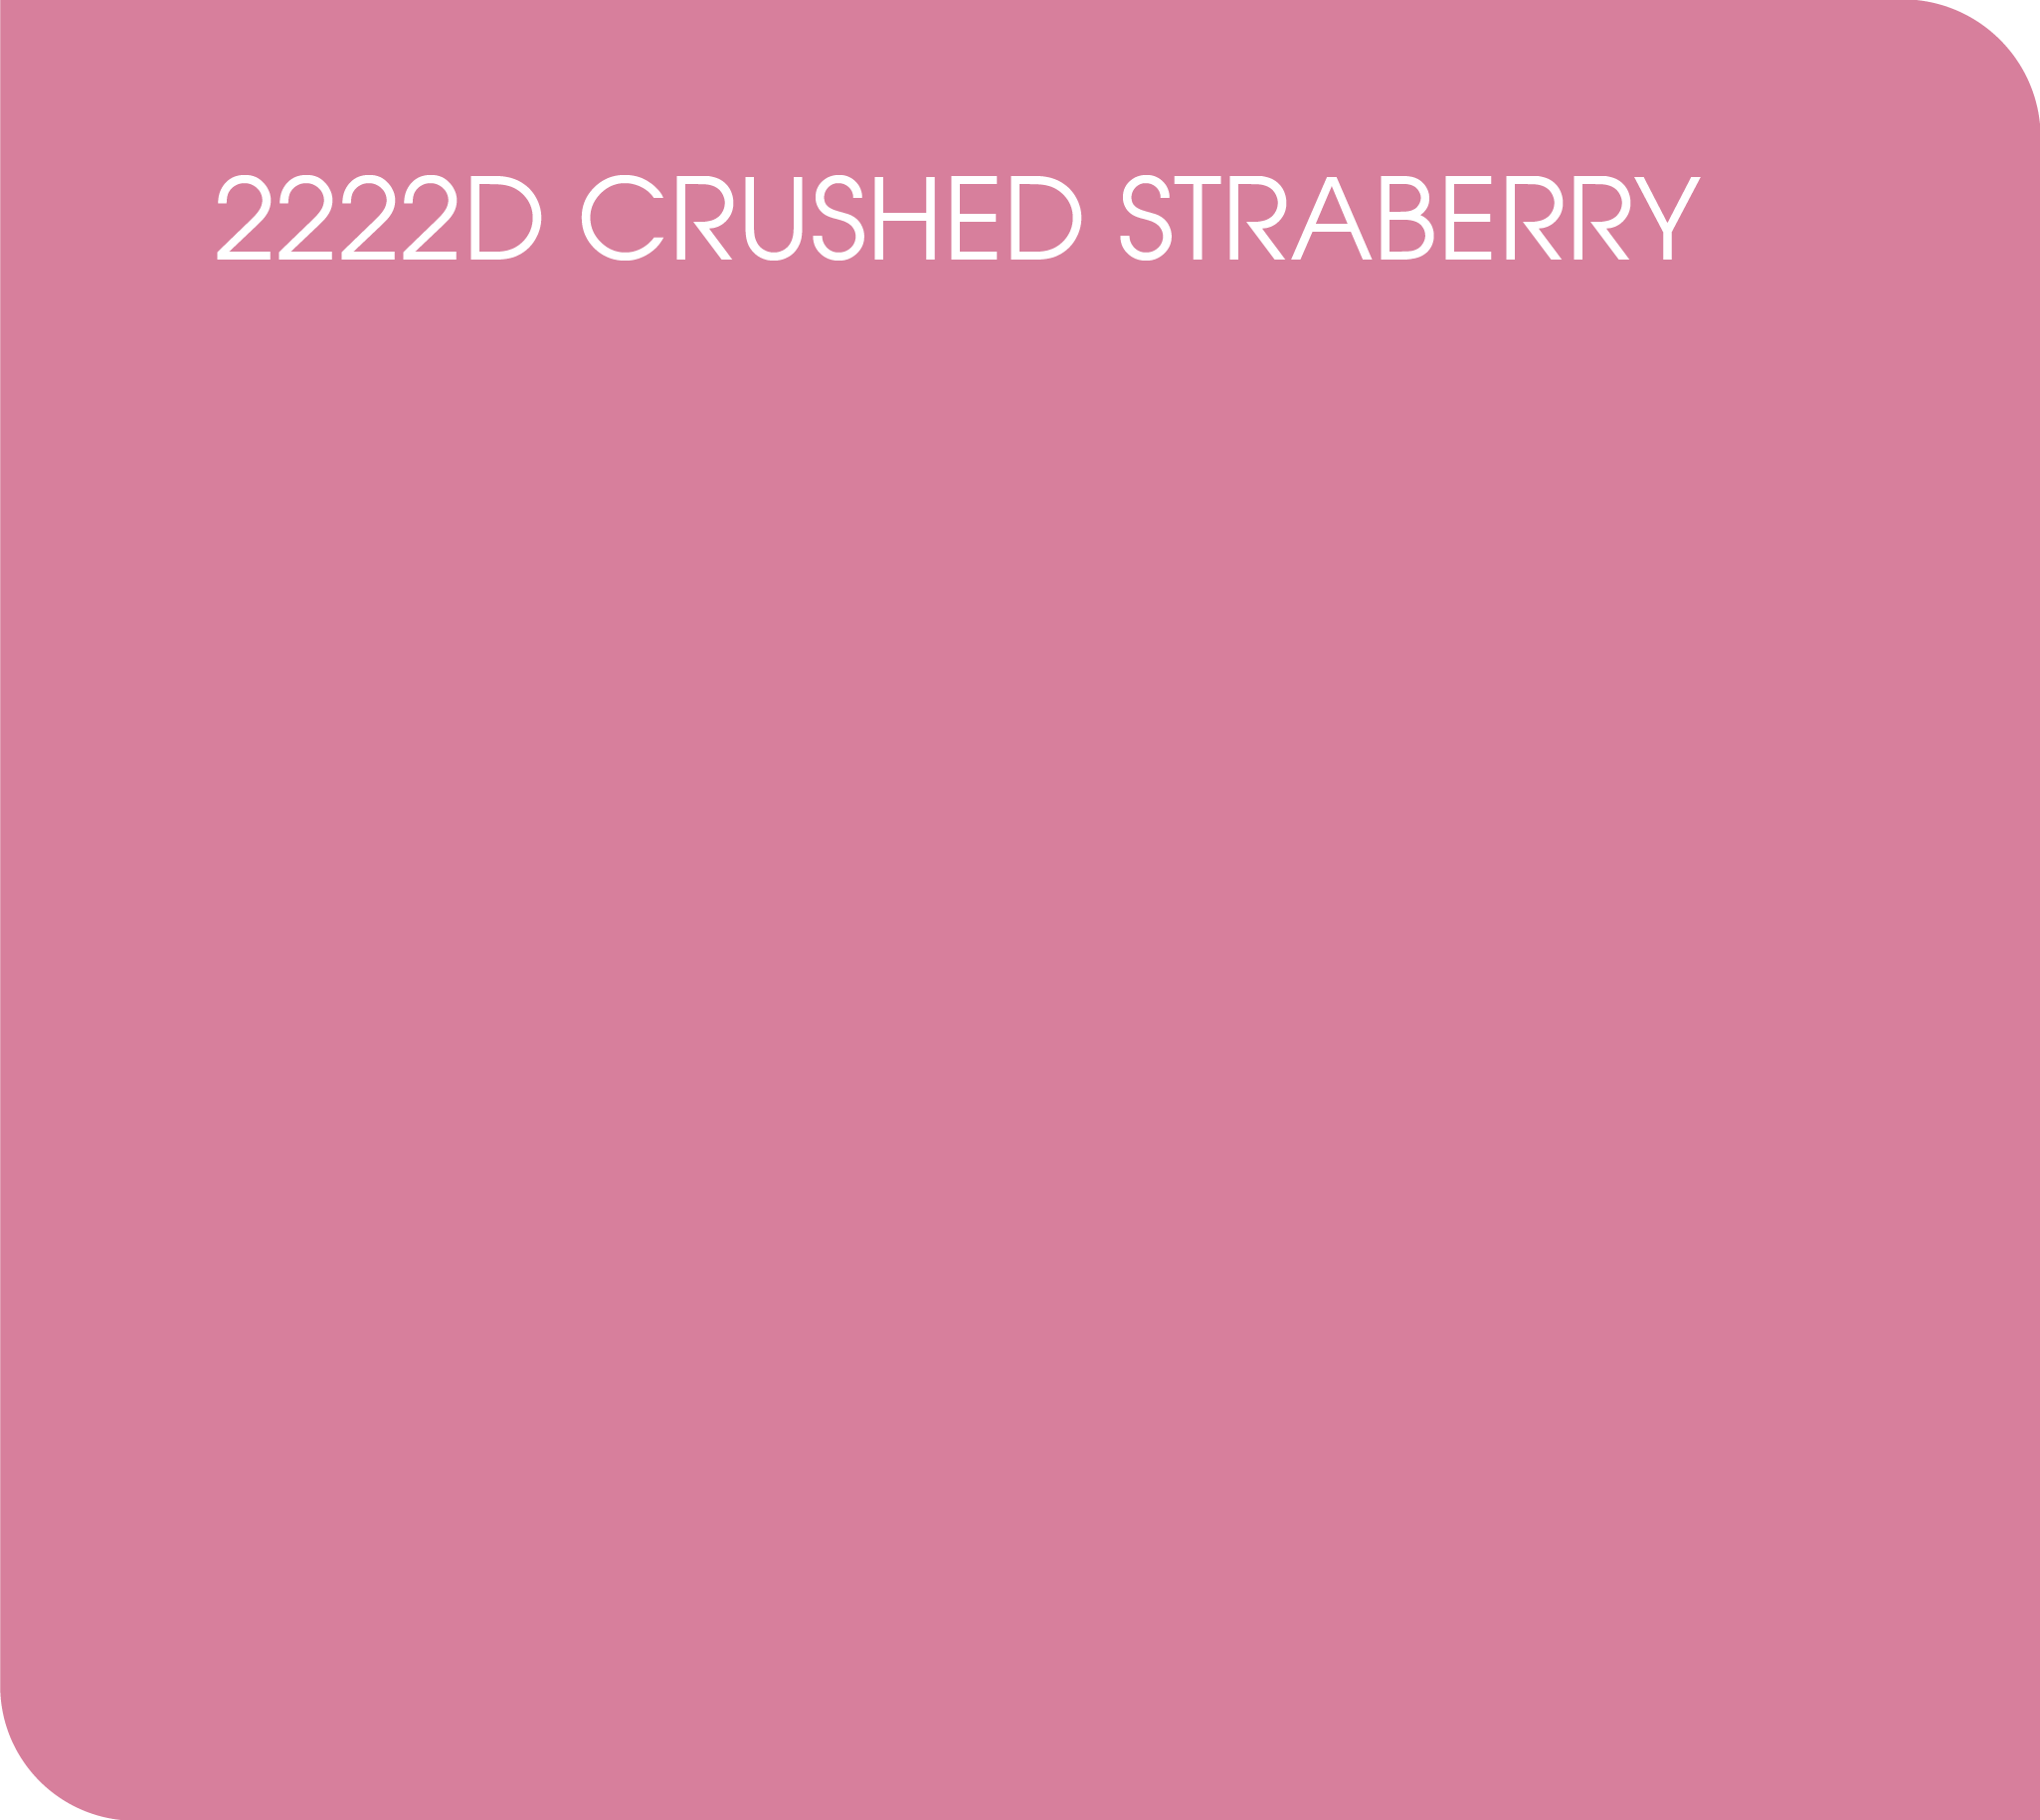 Crushed Strawberry